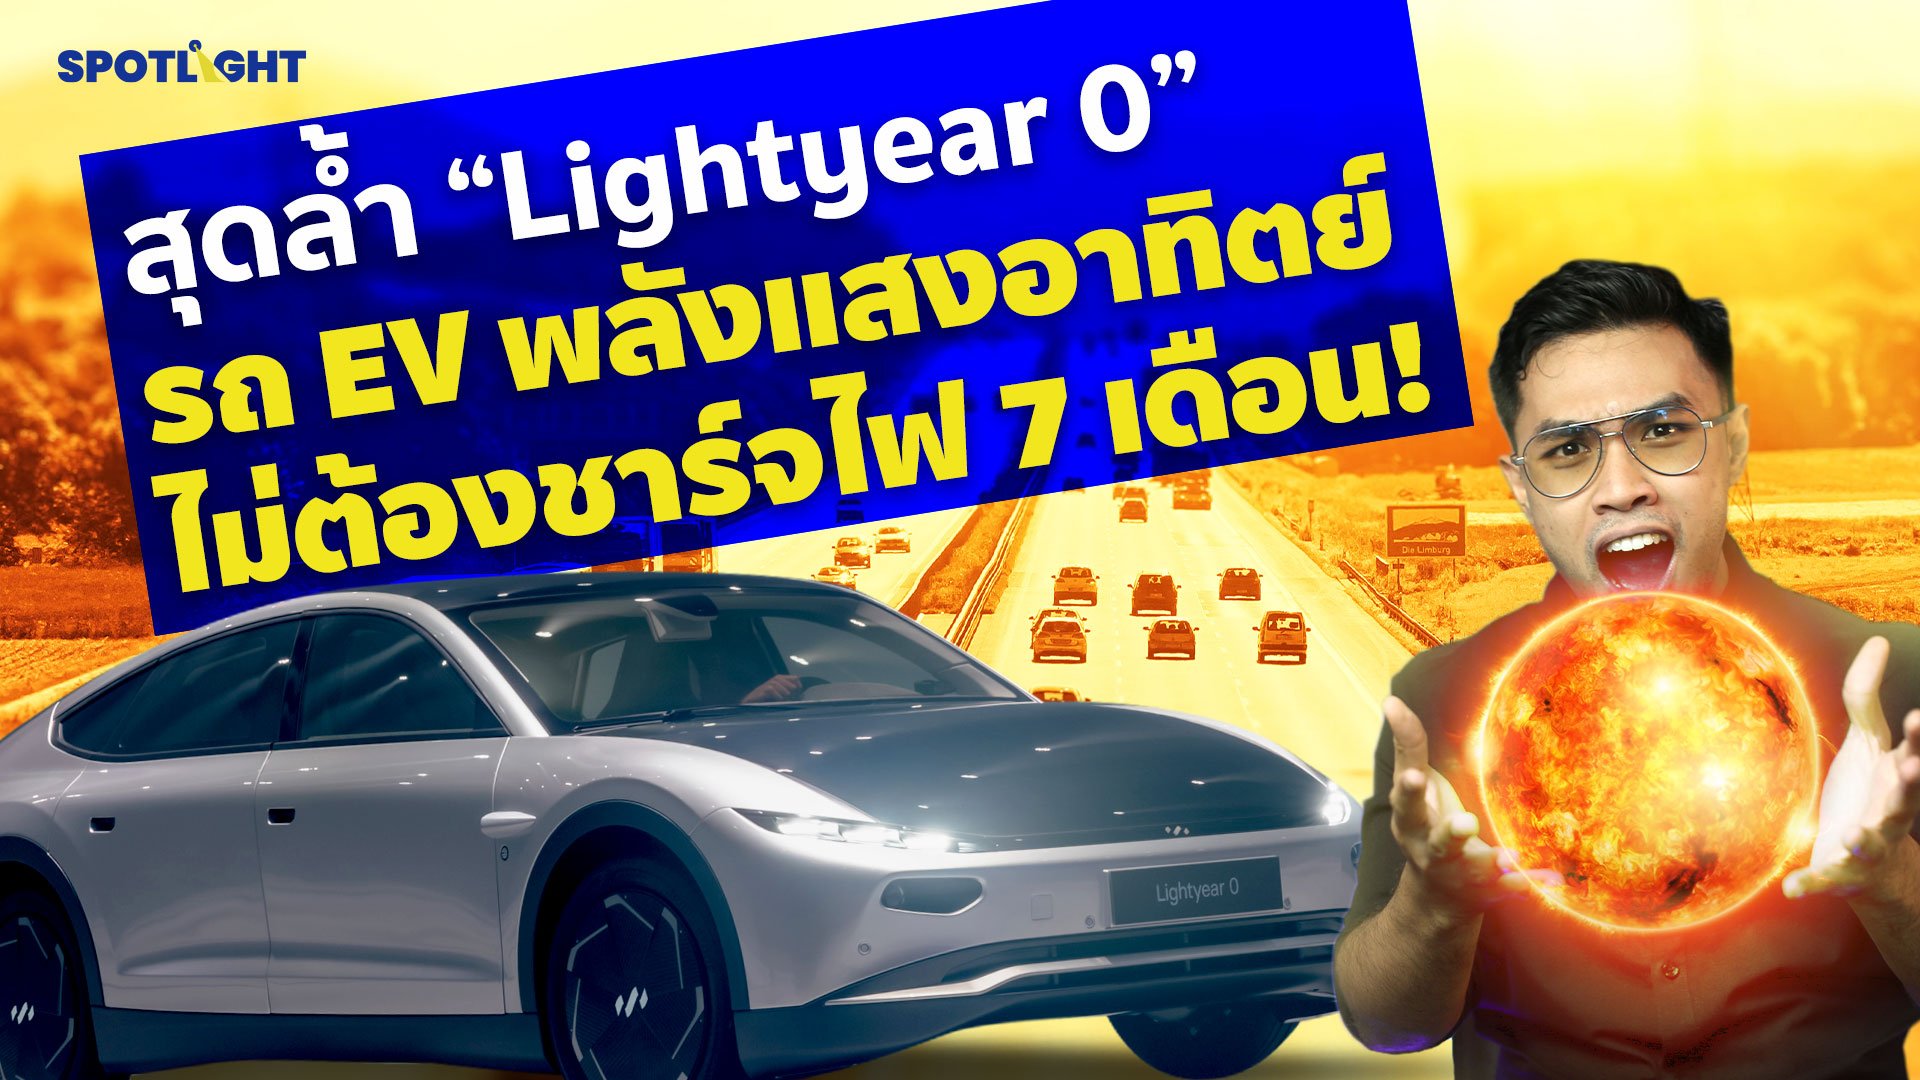 Lightyear0 รถไฟฟ้าพลังงานแสงอาทิตย์สุดล้ำ ไม่ต้องชาร์จไฟเลย 7 เดือน! | Spotlight | 22 มิ.ย. 65 | AMARIN TVHD34